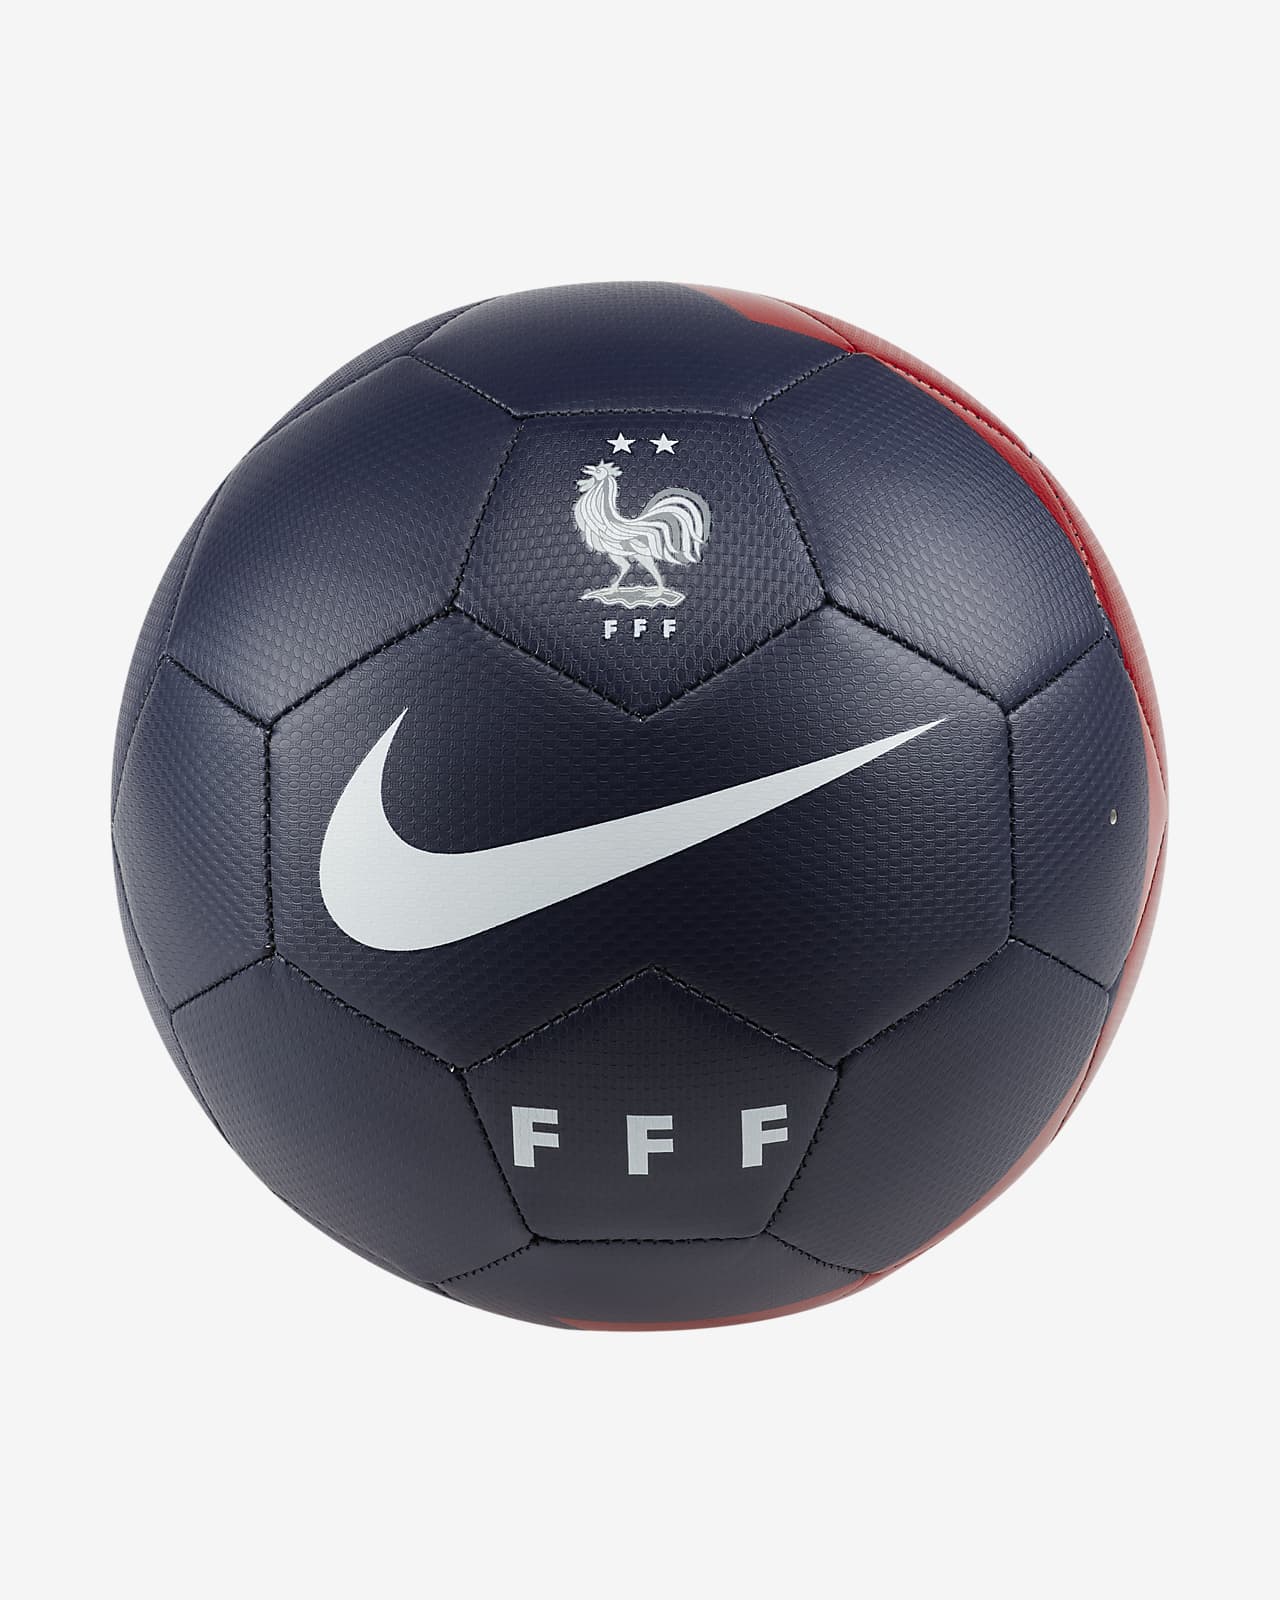 FFF Prestige - fodbold